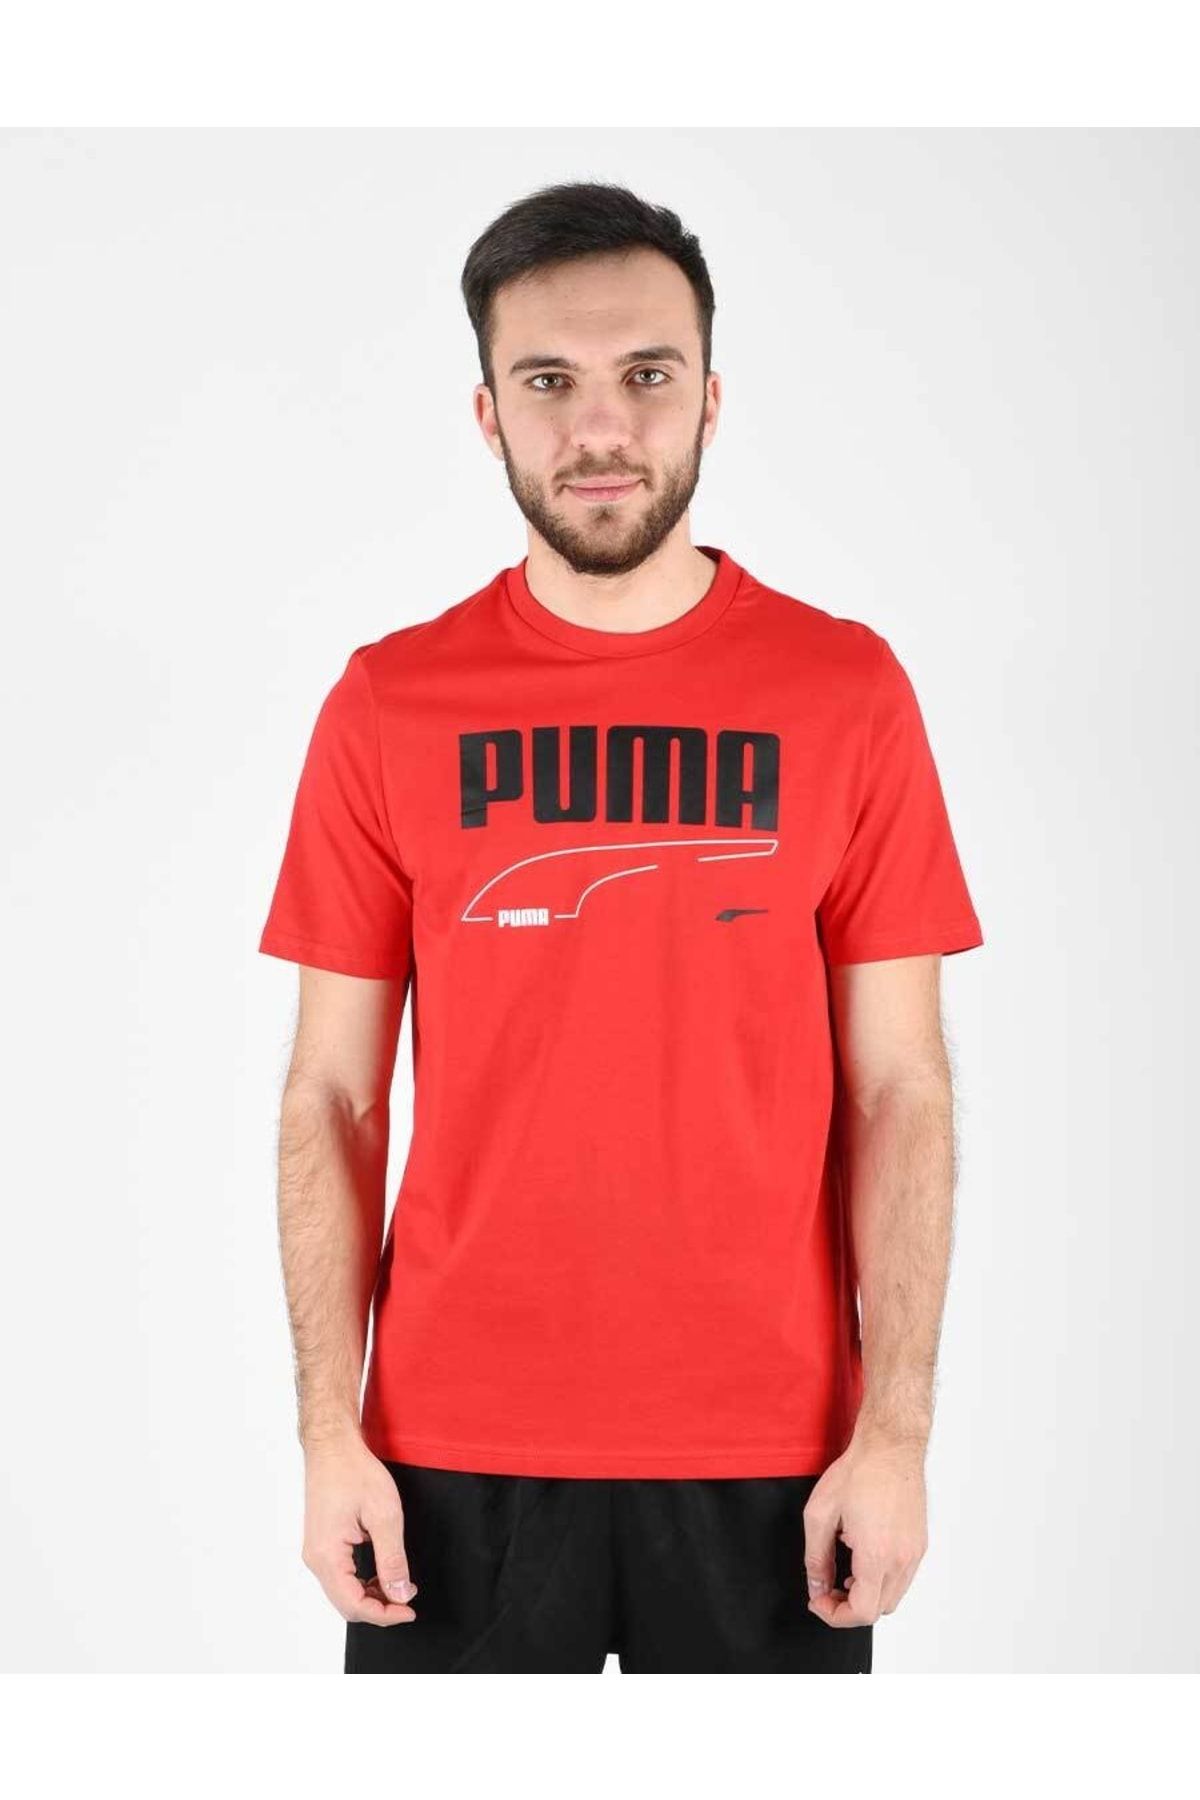 Puma Rebel Tee T-shirt 585738 11